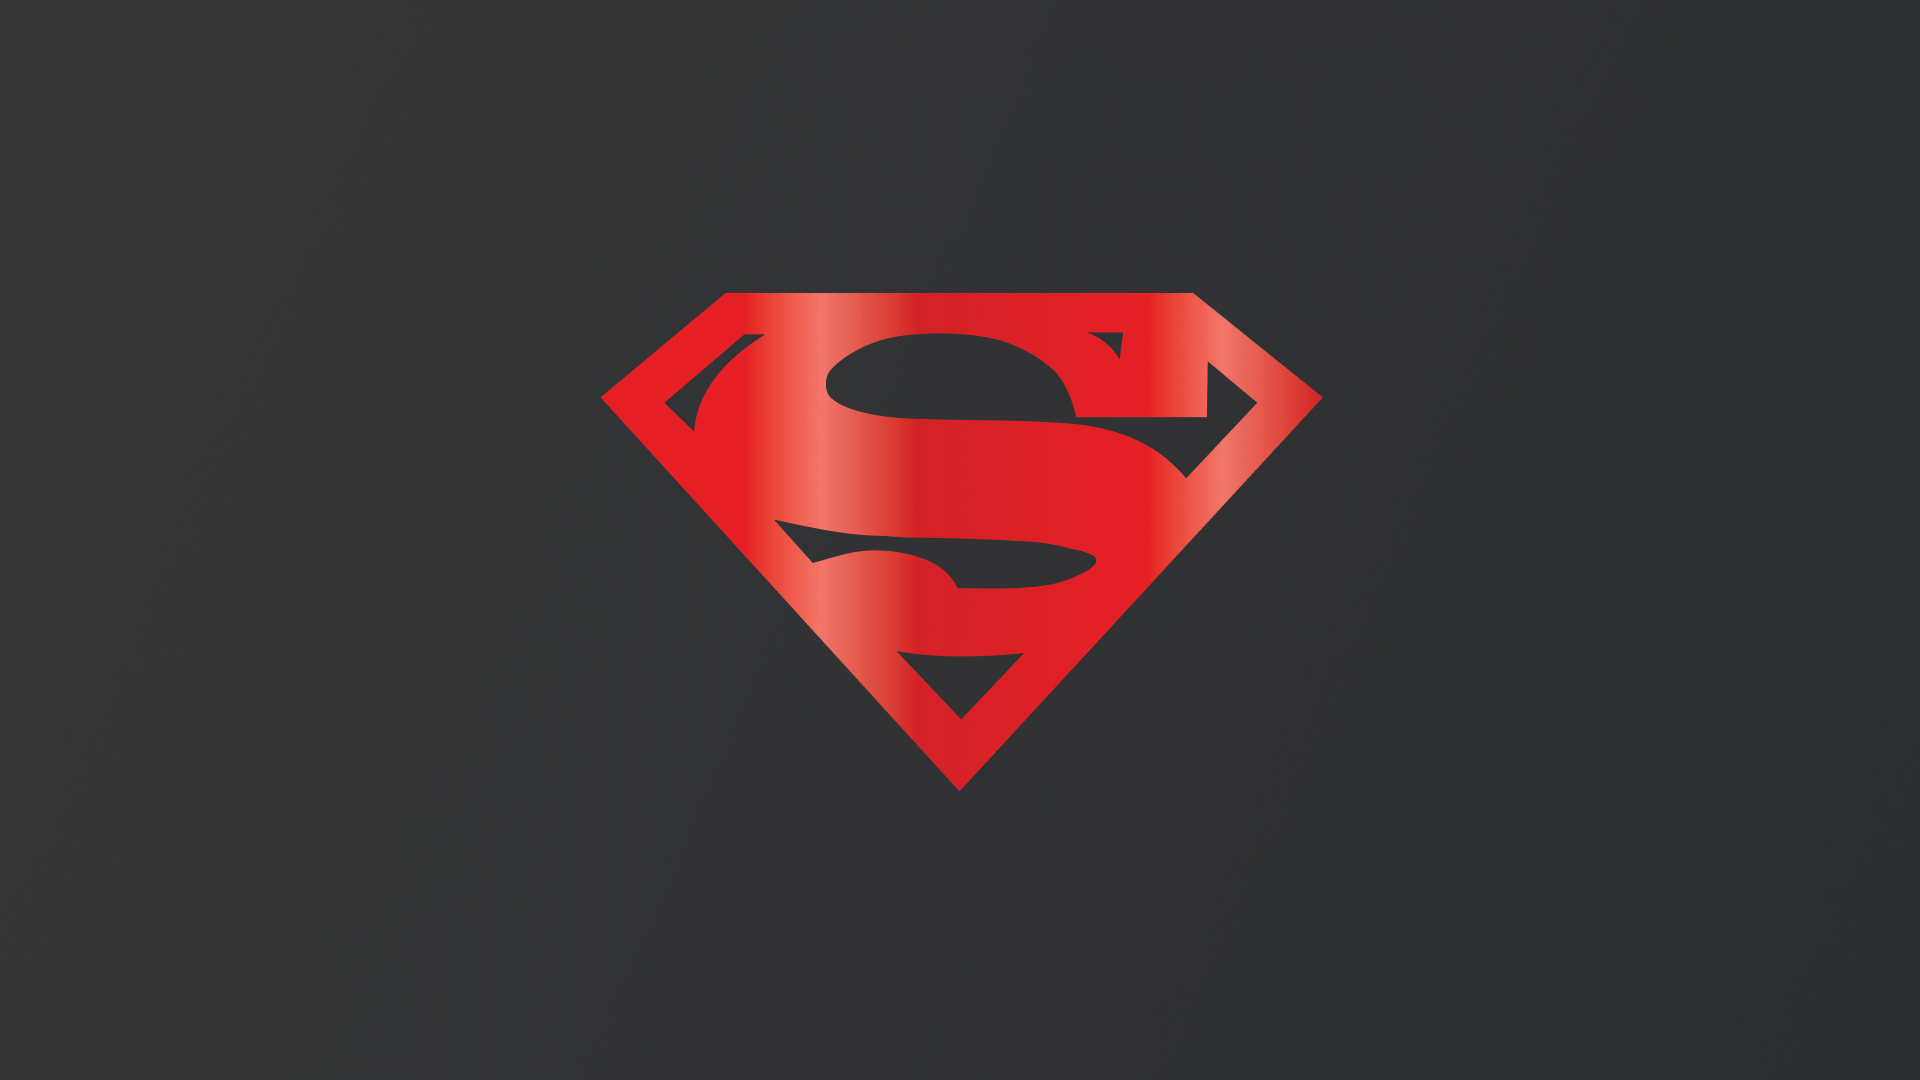 Download wallpaper 1920x1080 superman, logo, minimal, dc superhero, full hd,  hdtv, fhd, 1080p wallpaper, 1920x1080 hd background, 10446